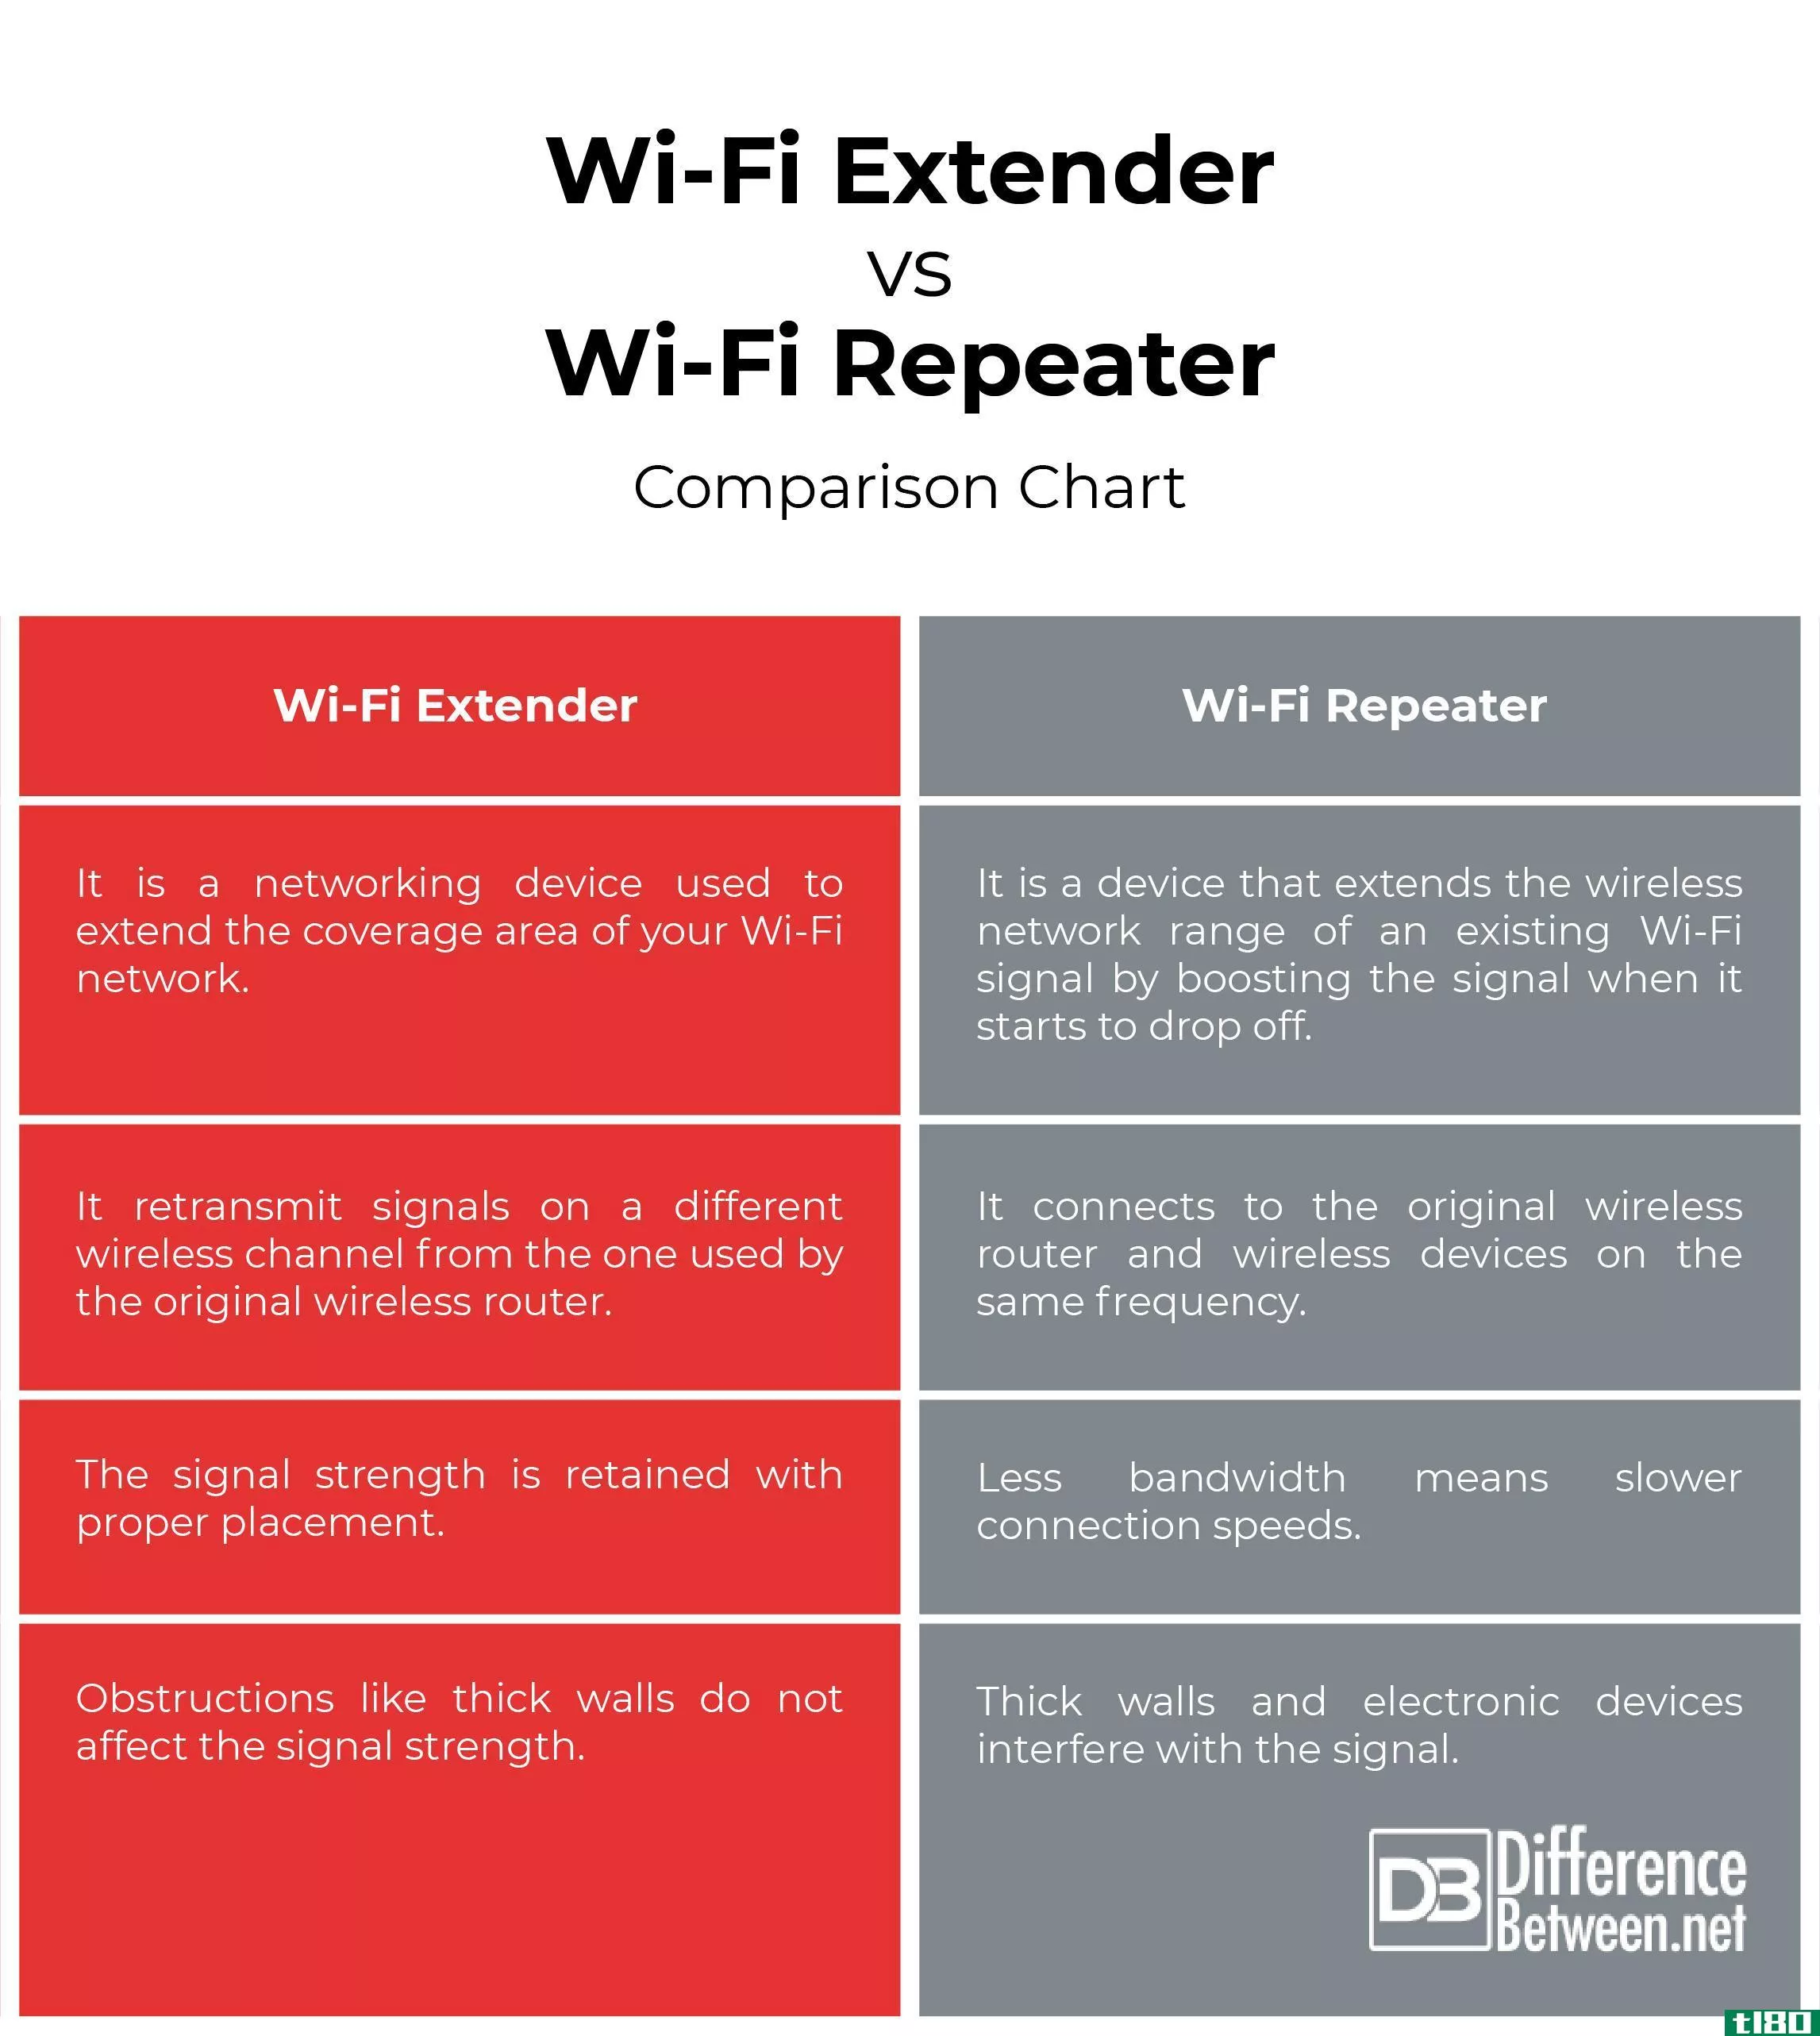 wi-fi扩展器(wi-fi extender)和中继器(repeater)的区别